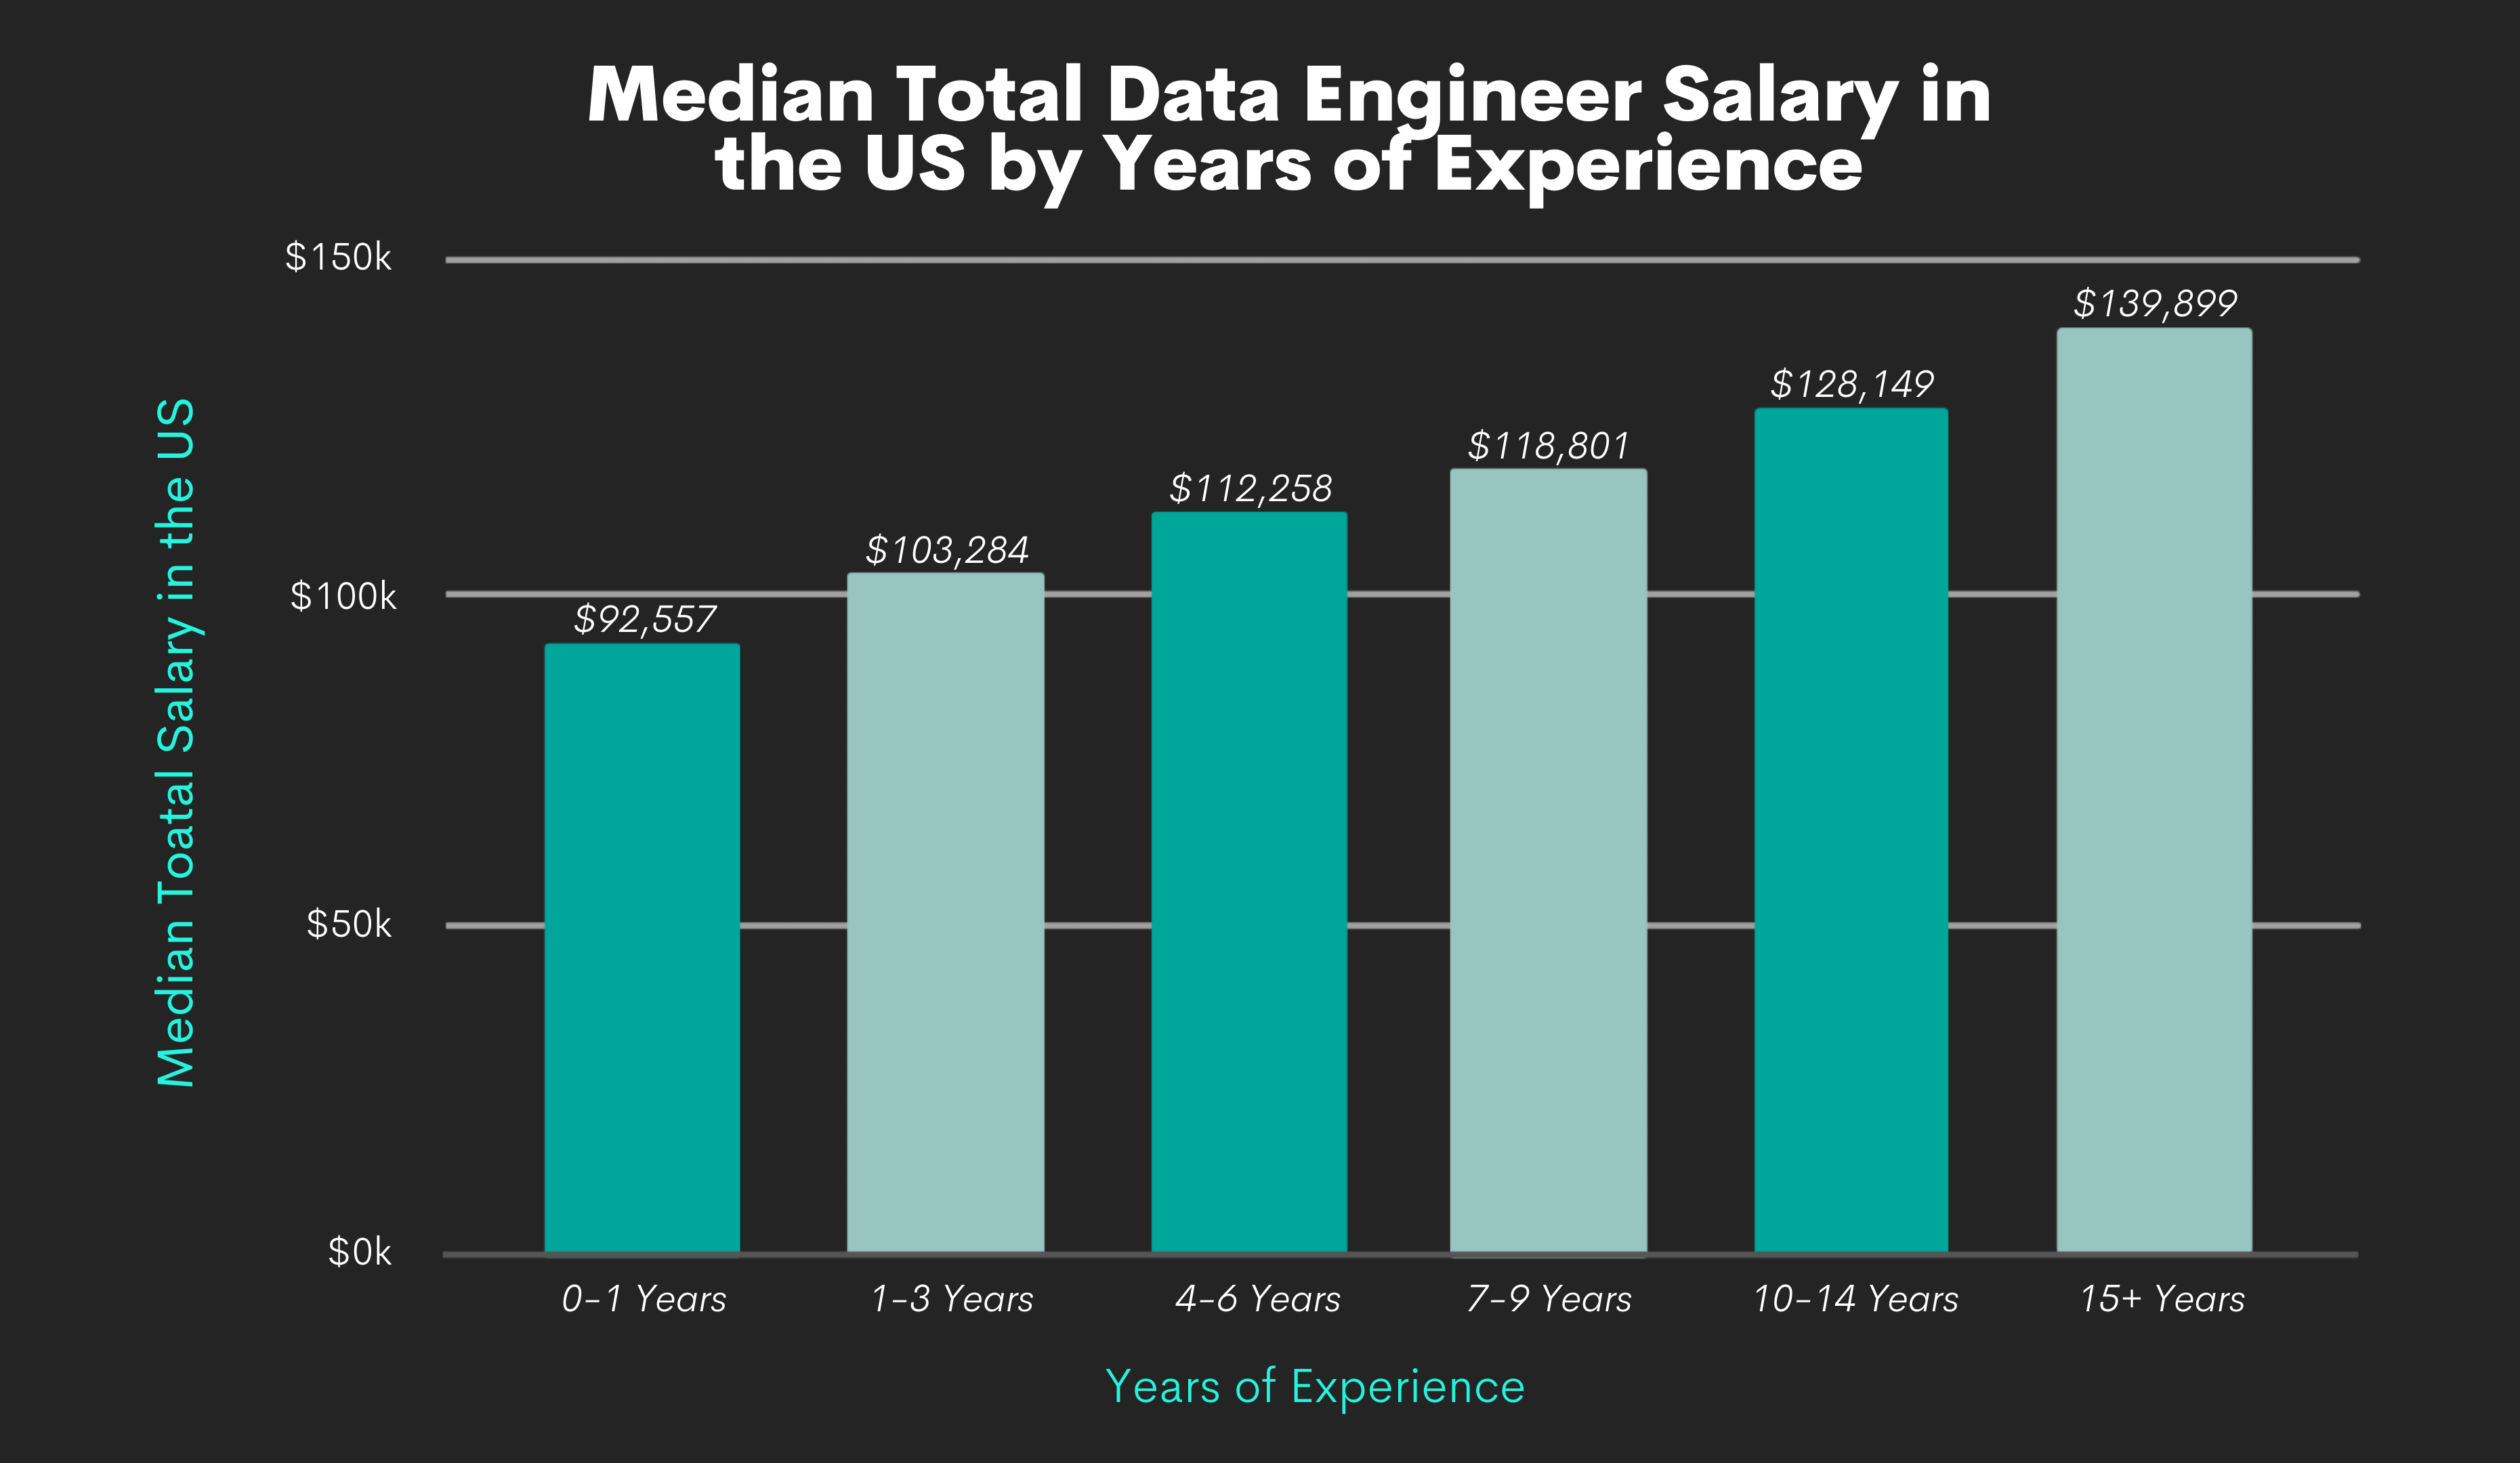 Data Engineer Salaries by Experience